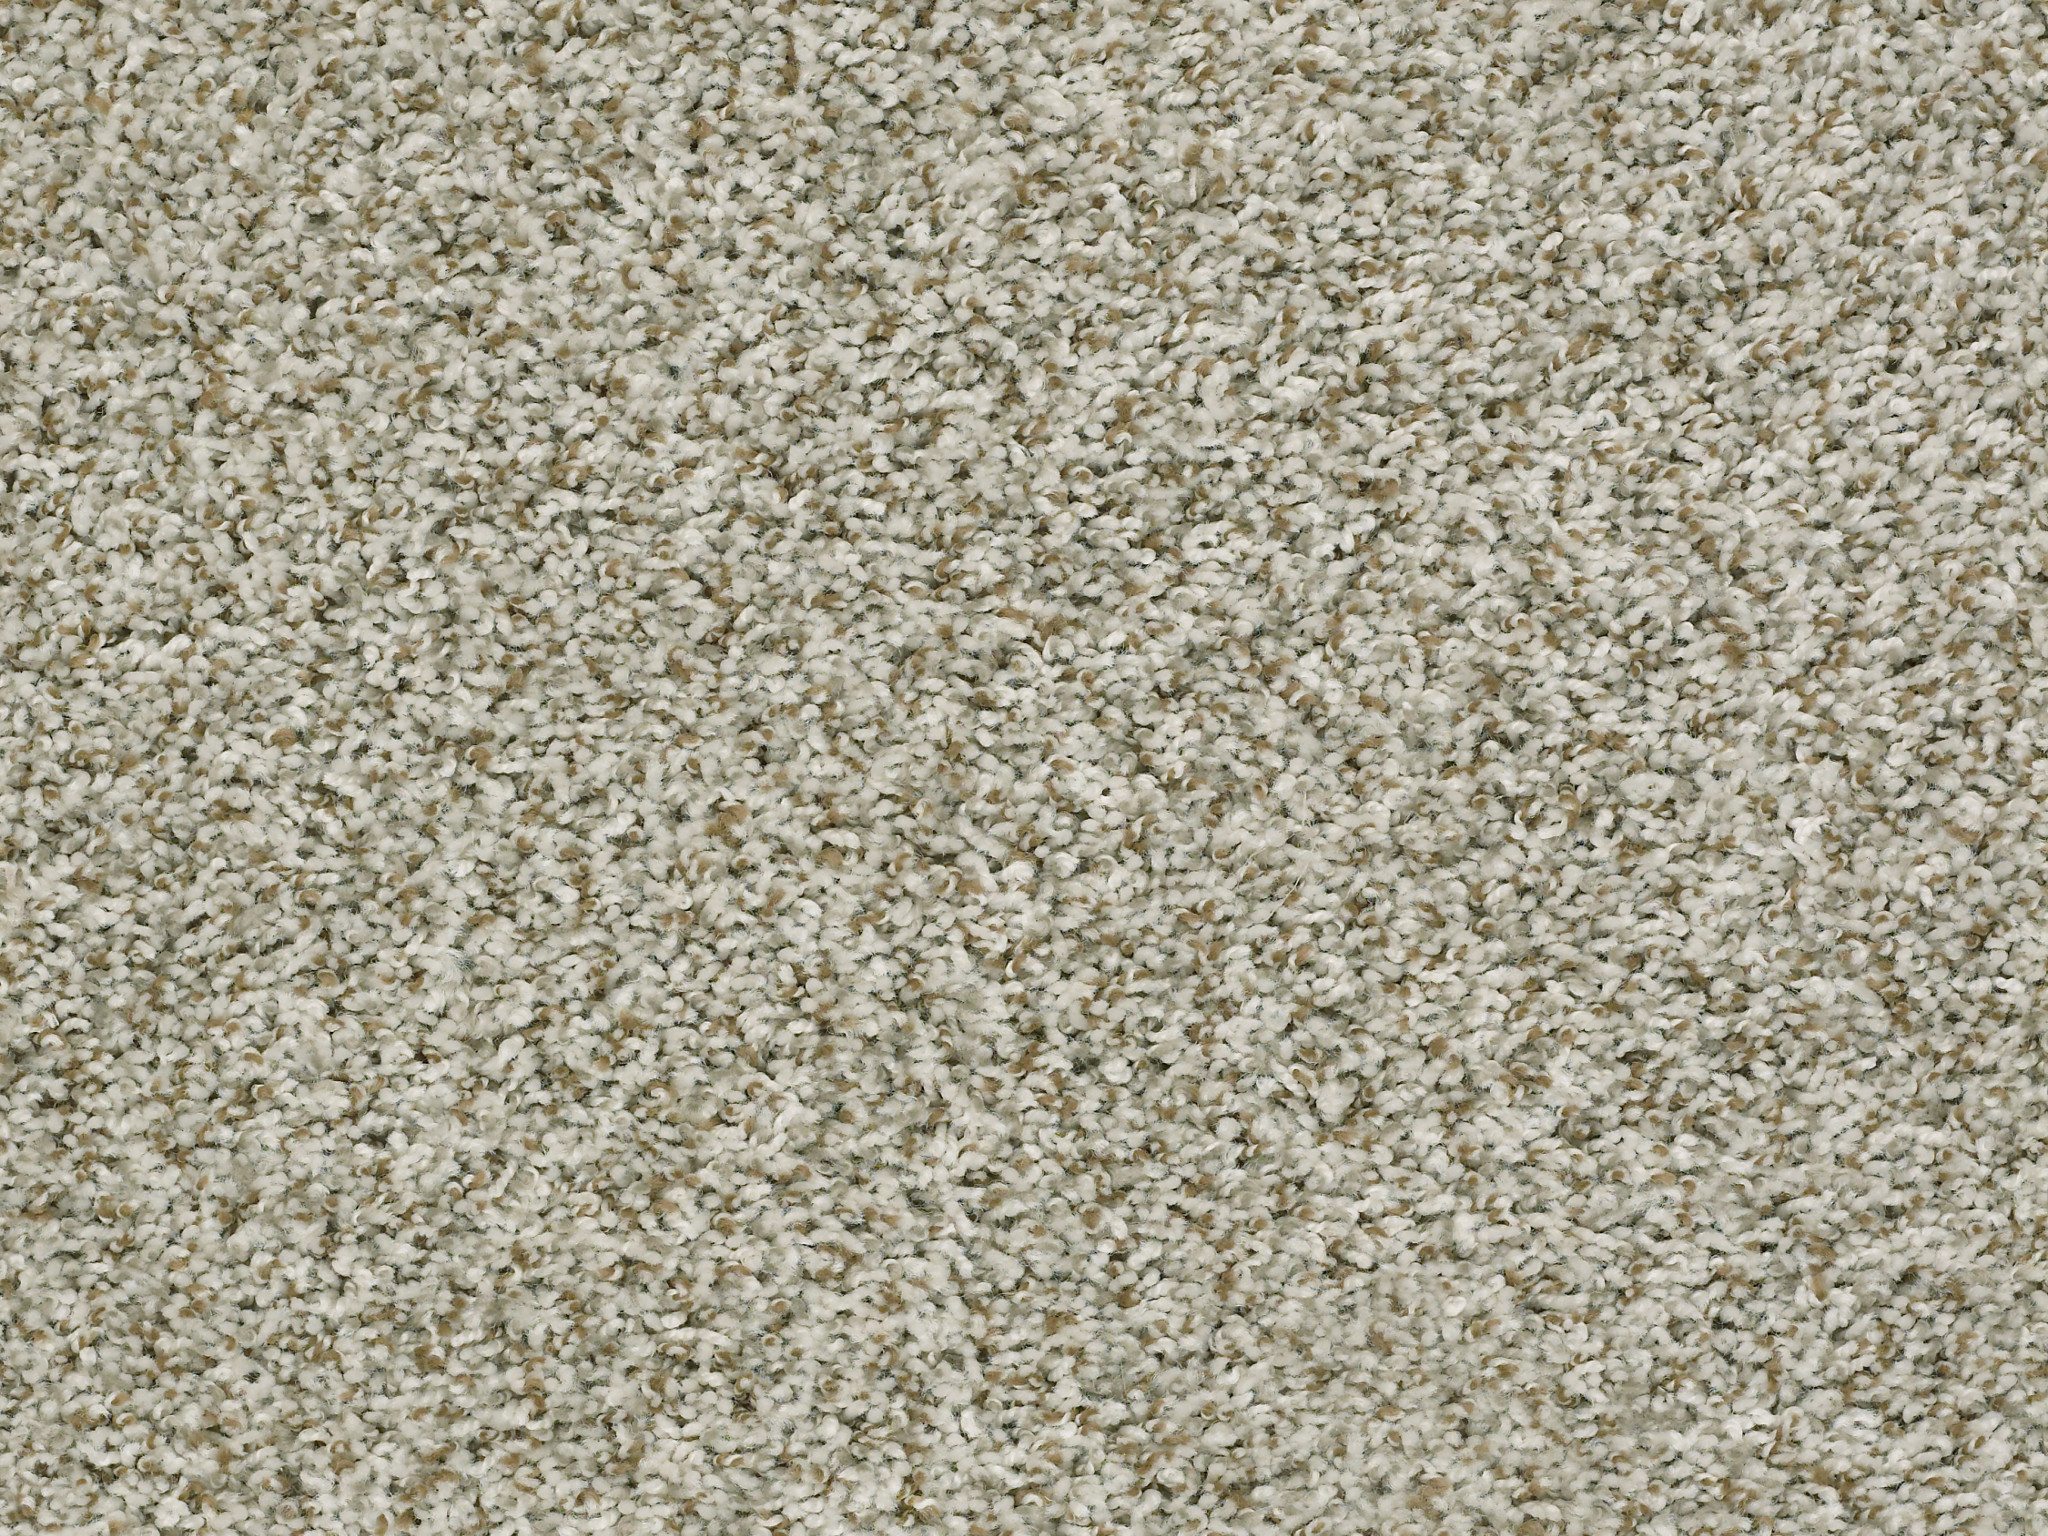 Venture Tonal Carpet - Buff Zoomed Swatch Image